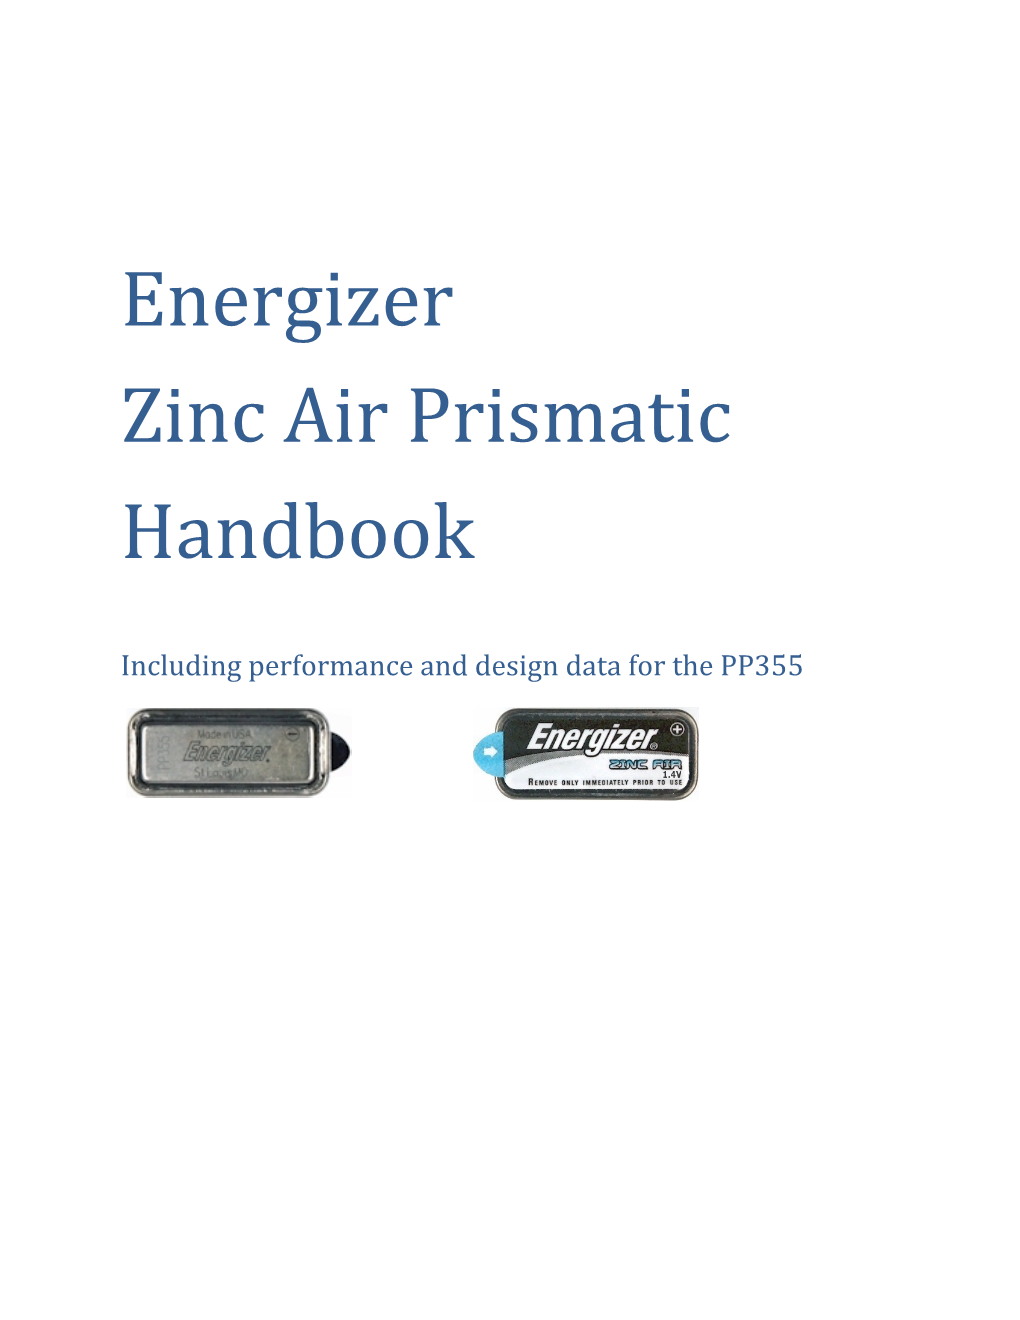 Energizer Zinc Air Prismatic Handbook